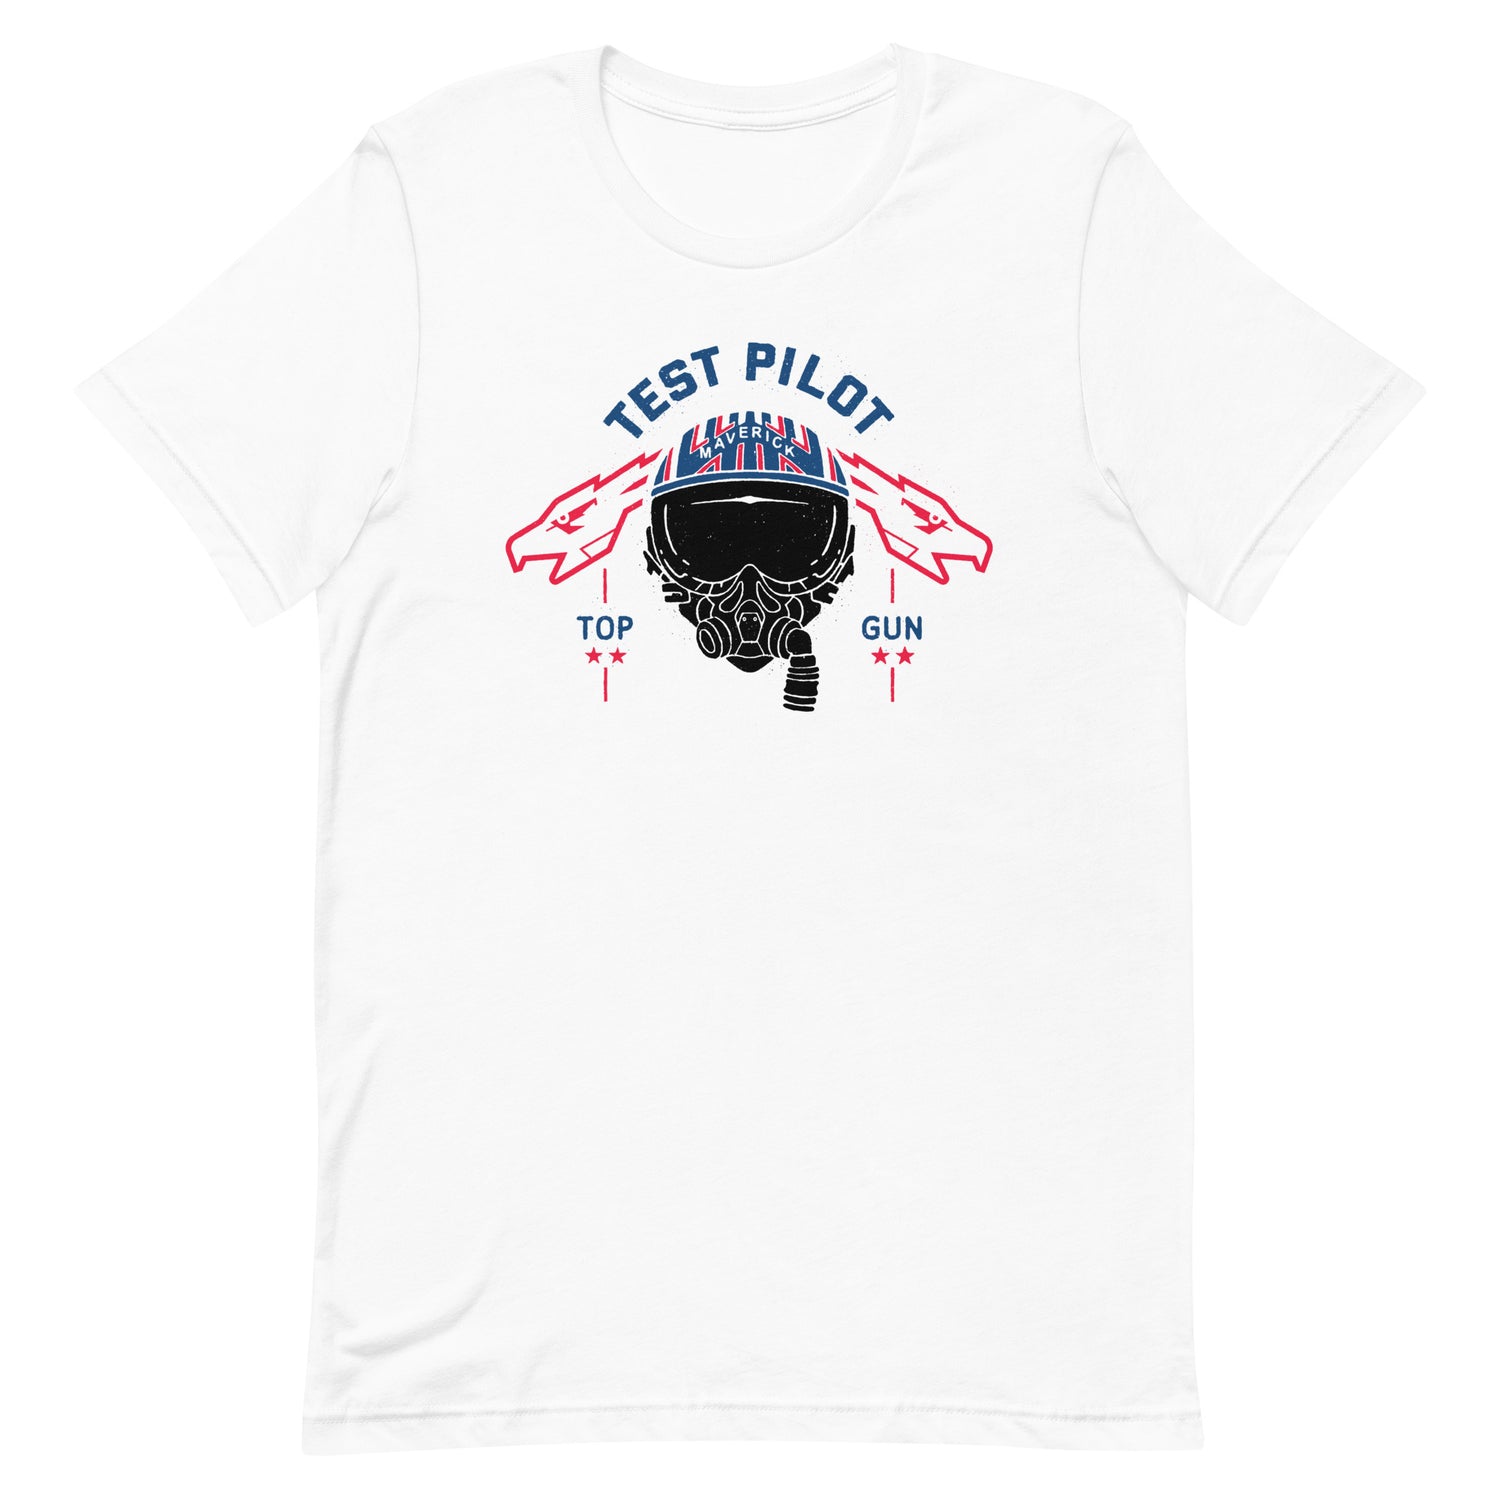 Top Gun: Maverick Test Pilot Unisex Premium T-Shirt